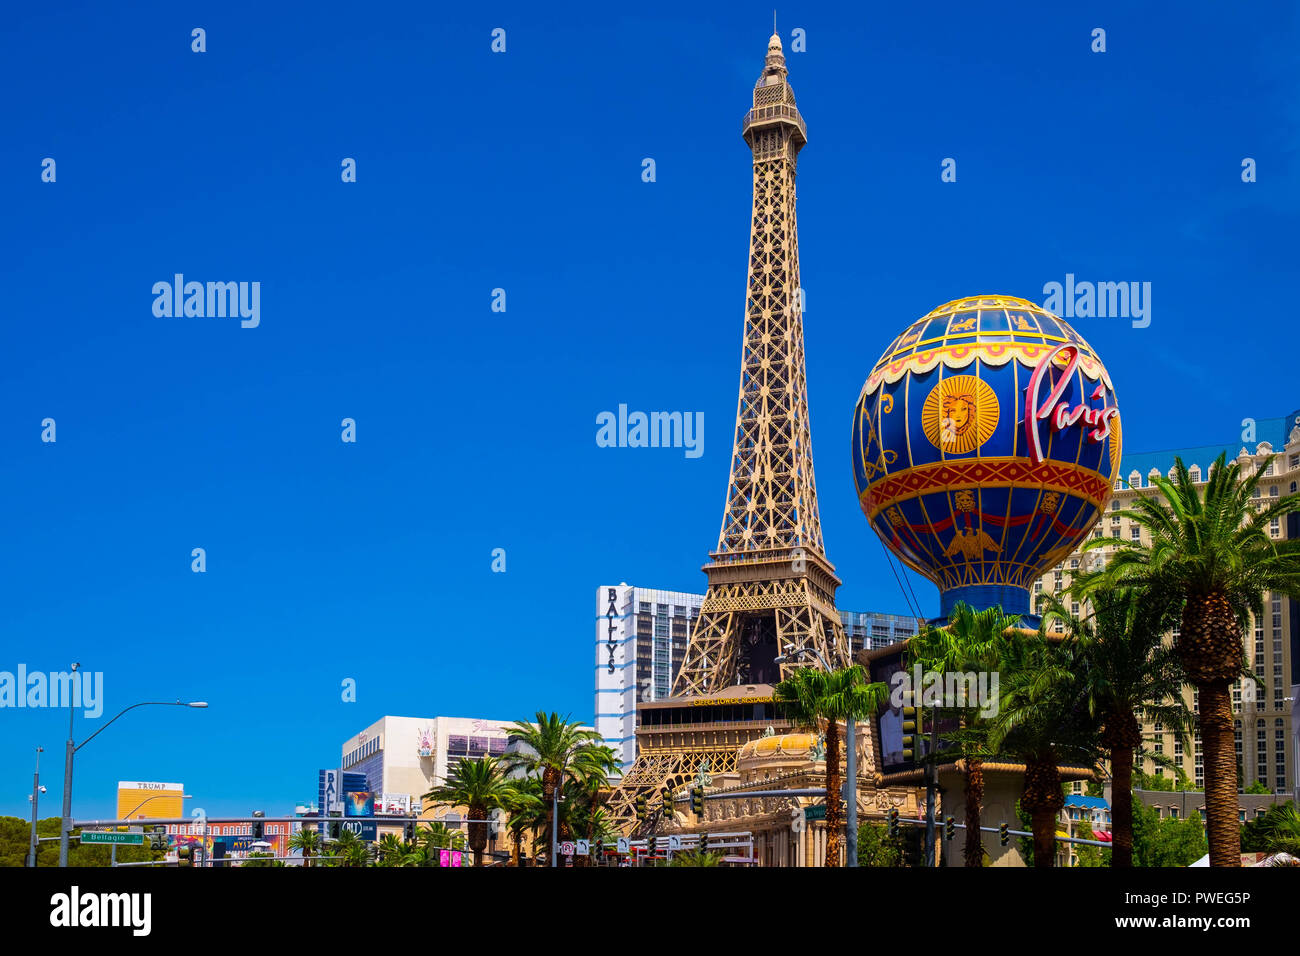 Il Paris Las Vegas Hotel e resort di Las Vegas Boulevard, la striscia, Nevada Foto Stock